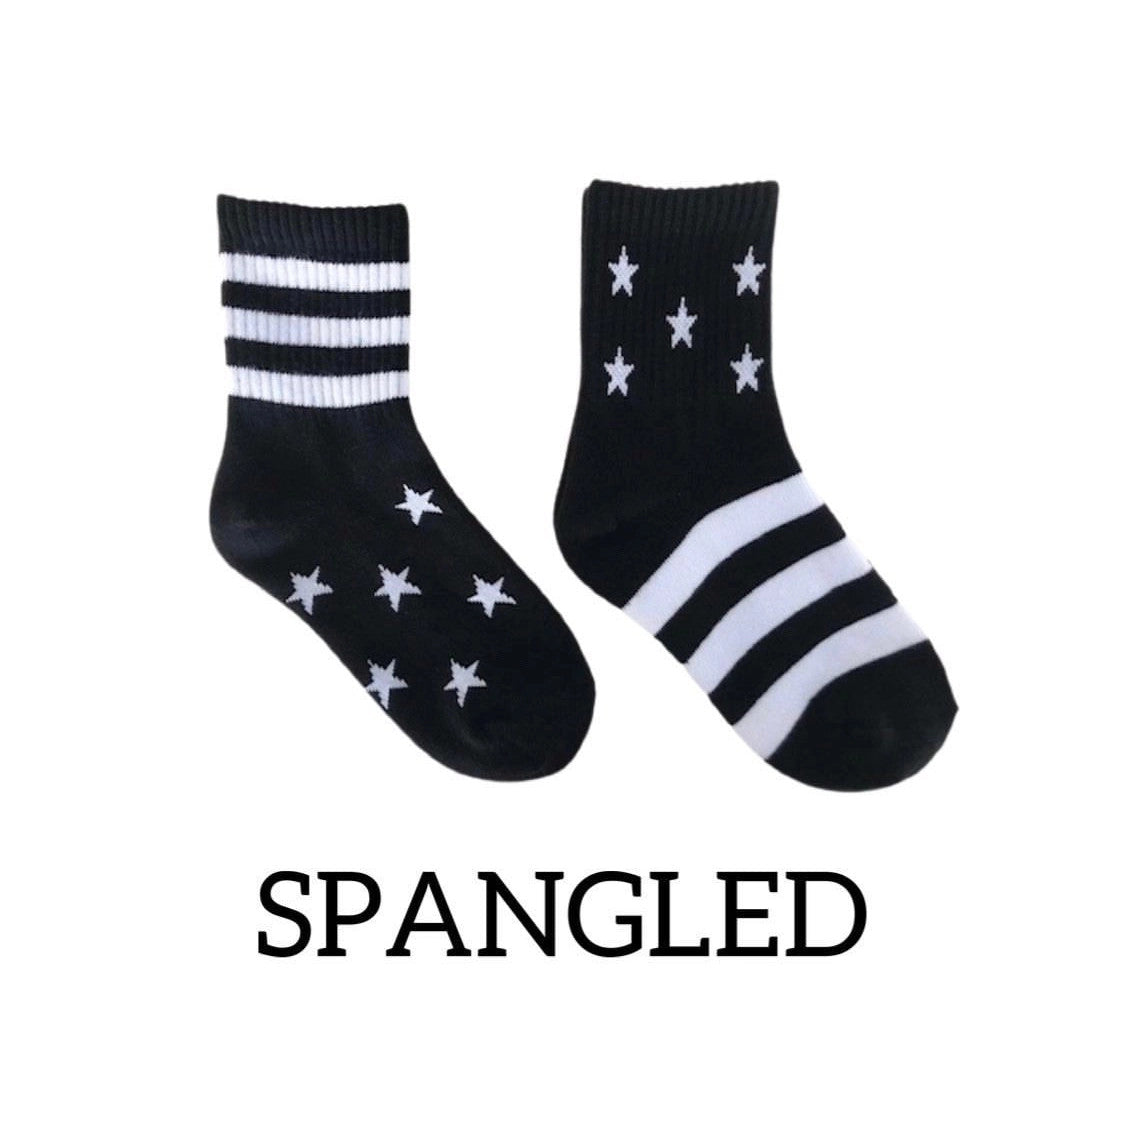 Spangled Socks